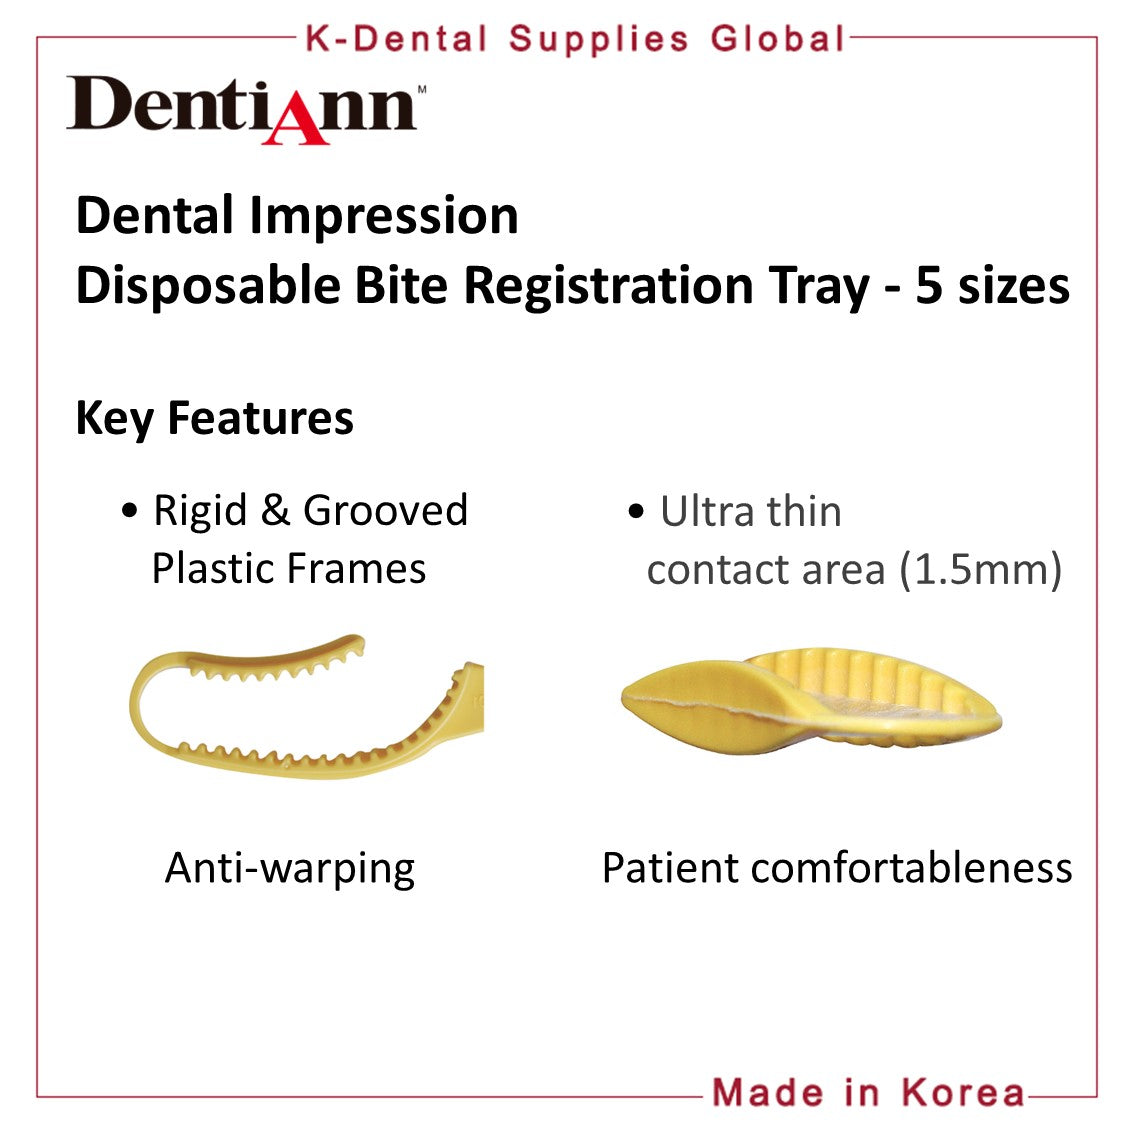 Dental Impression Disposable Bite Tray Made in Korea (5 sizes)